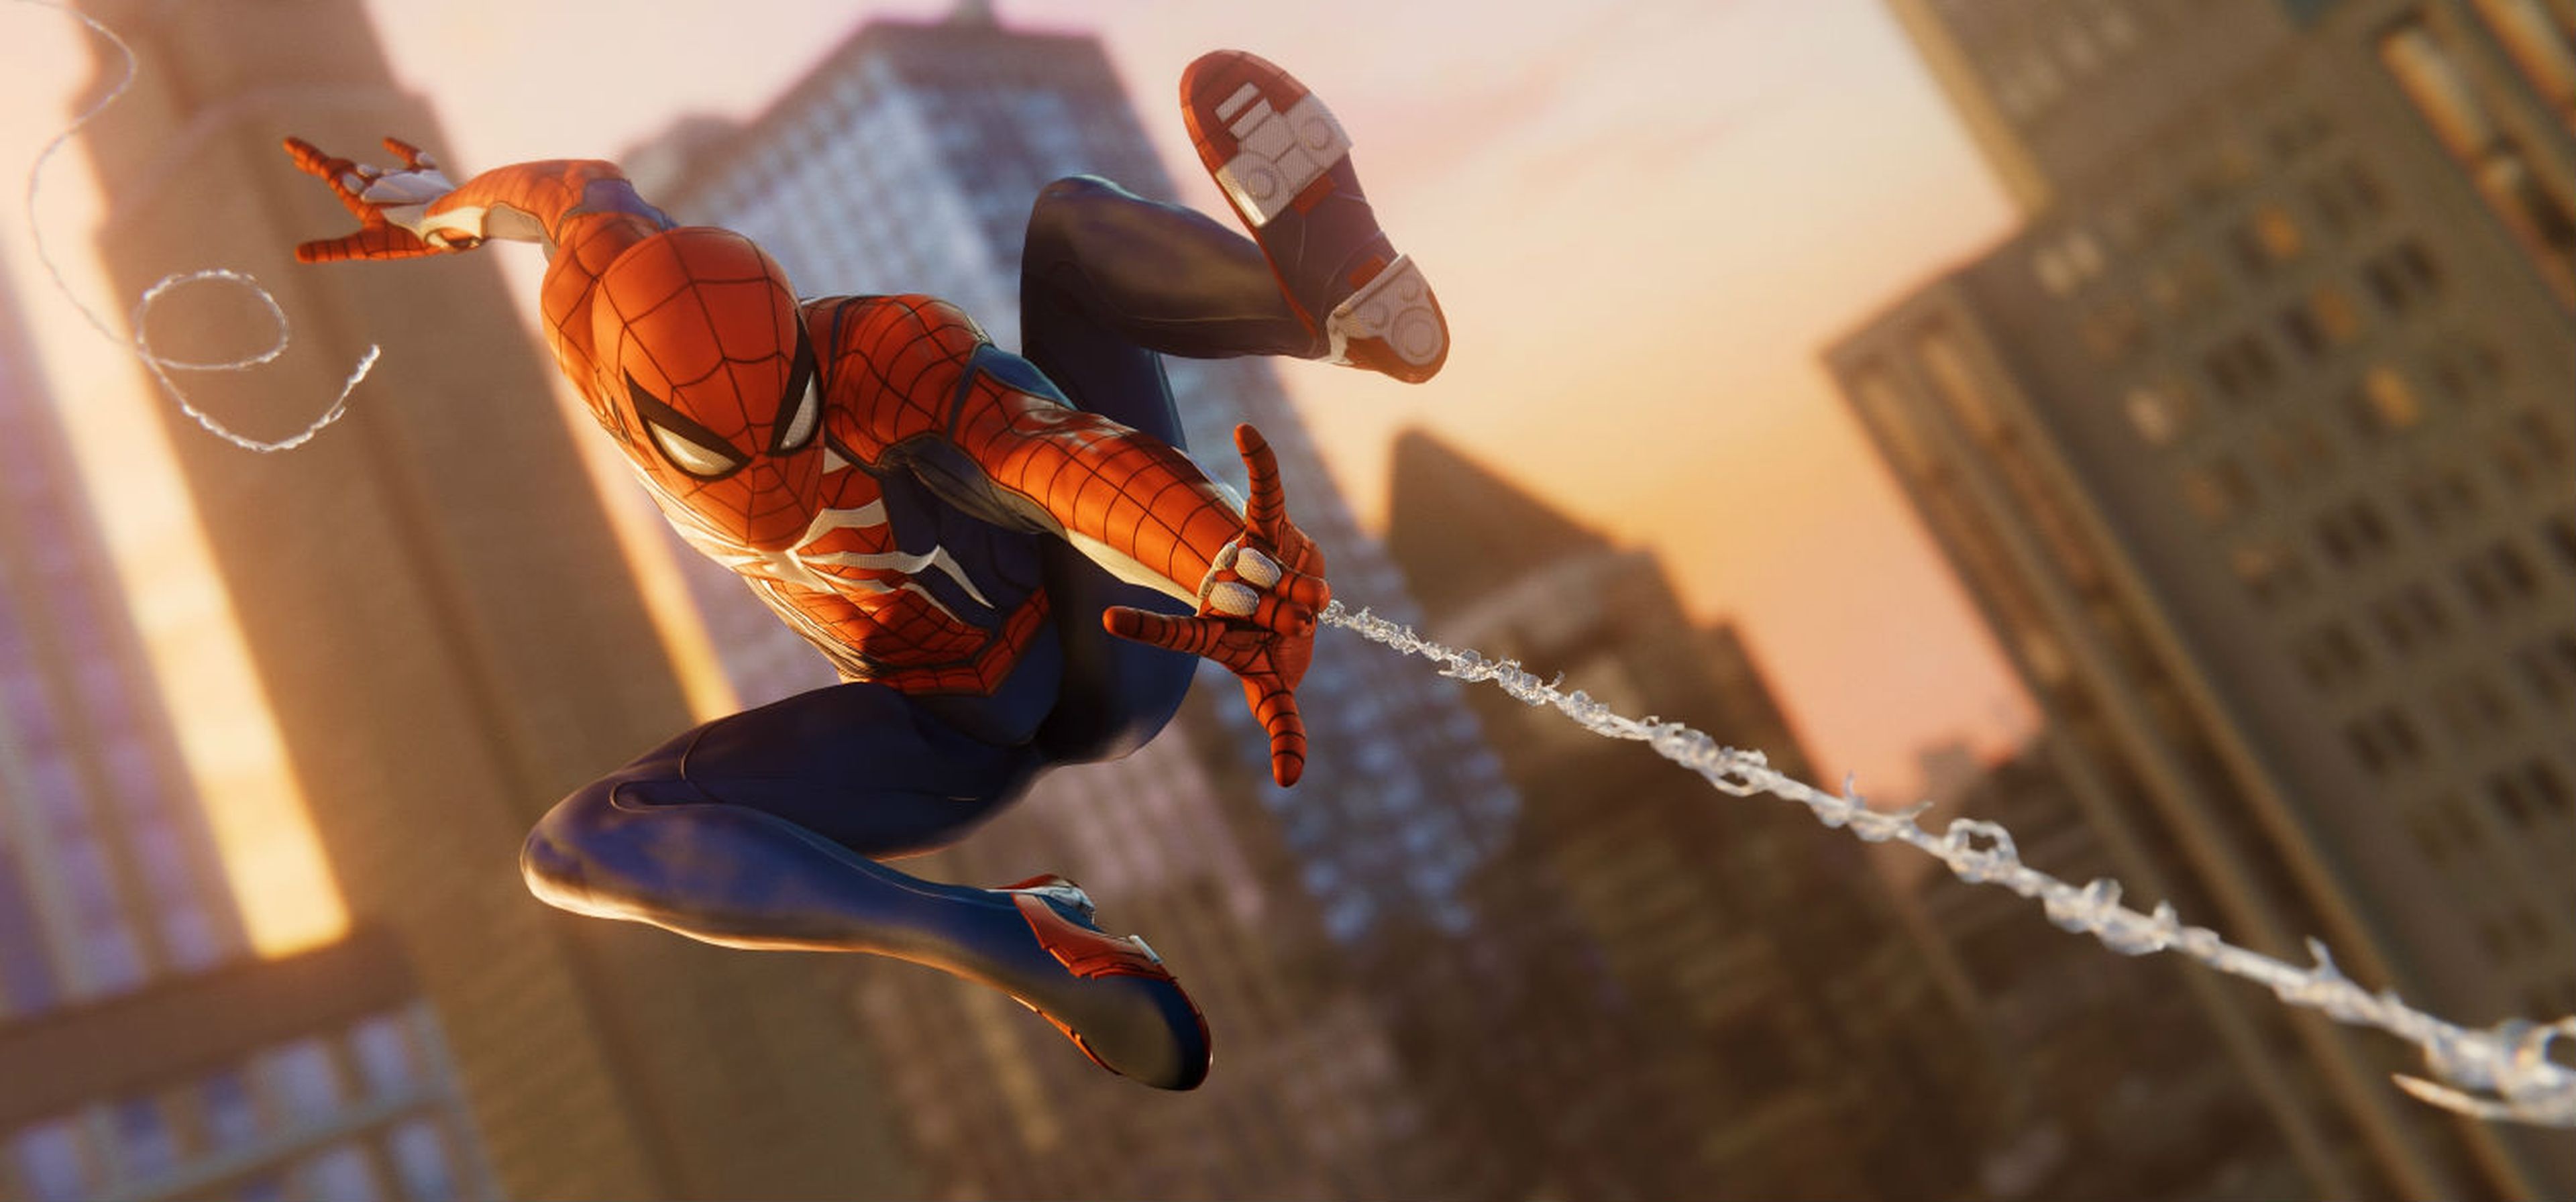 Análisis de Marvel's Spider-Man para PS4